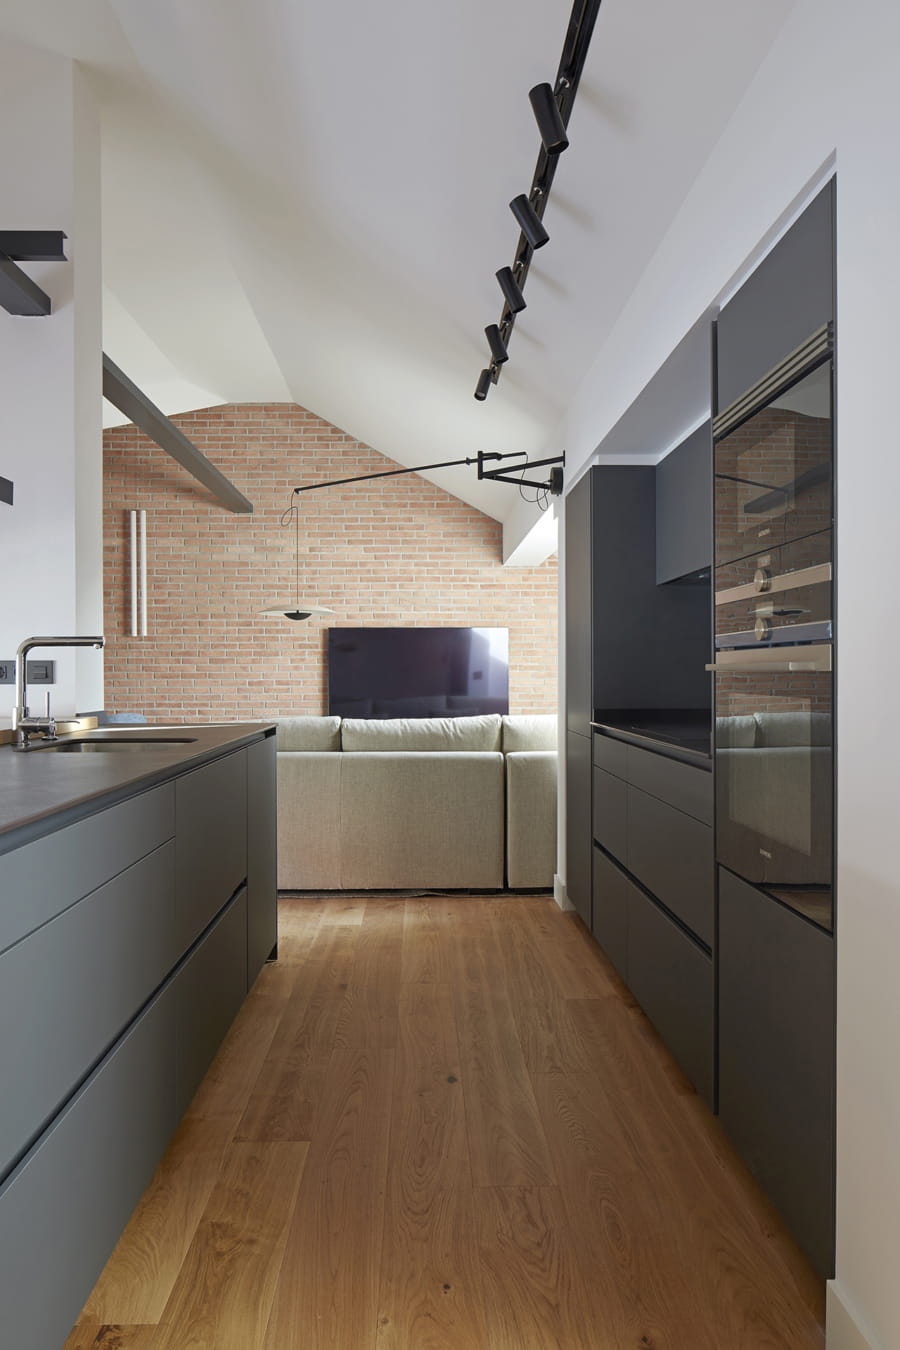 Kitchen open to the living room designed by architect Borja Vildosola